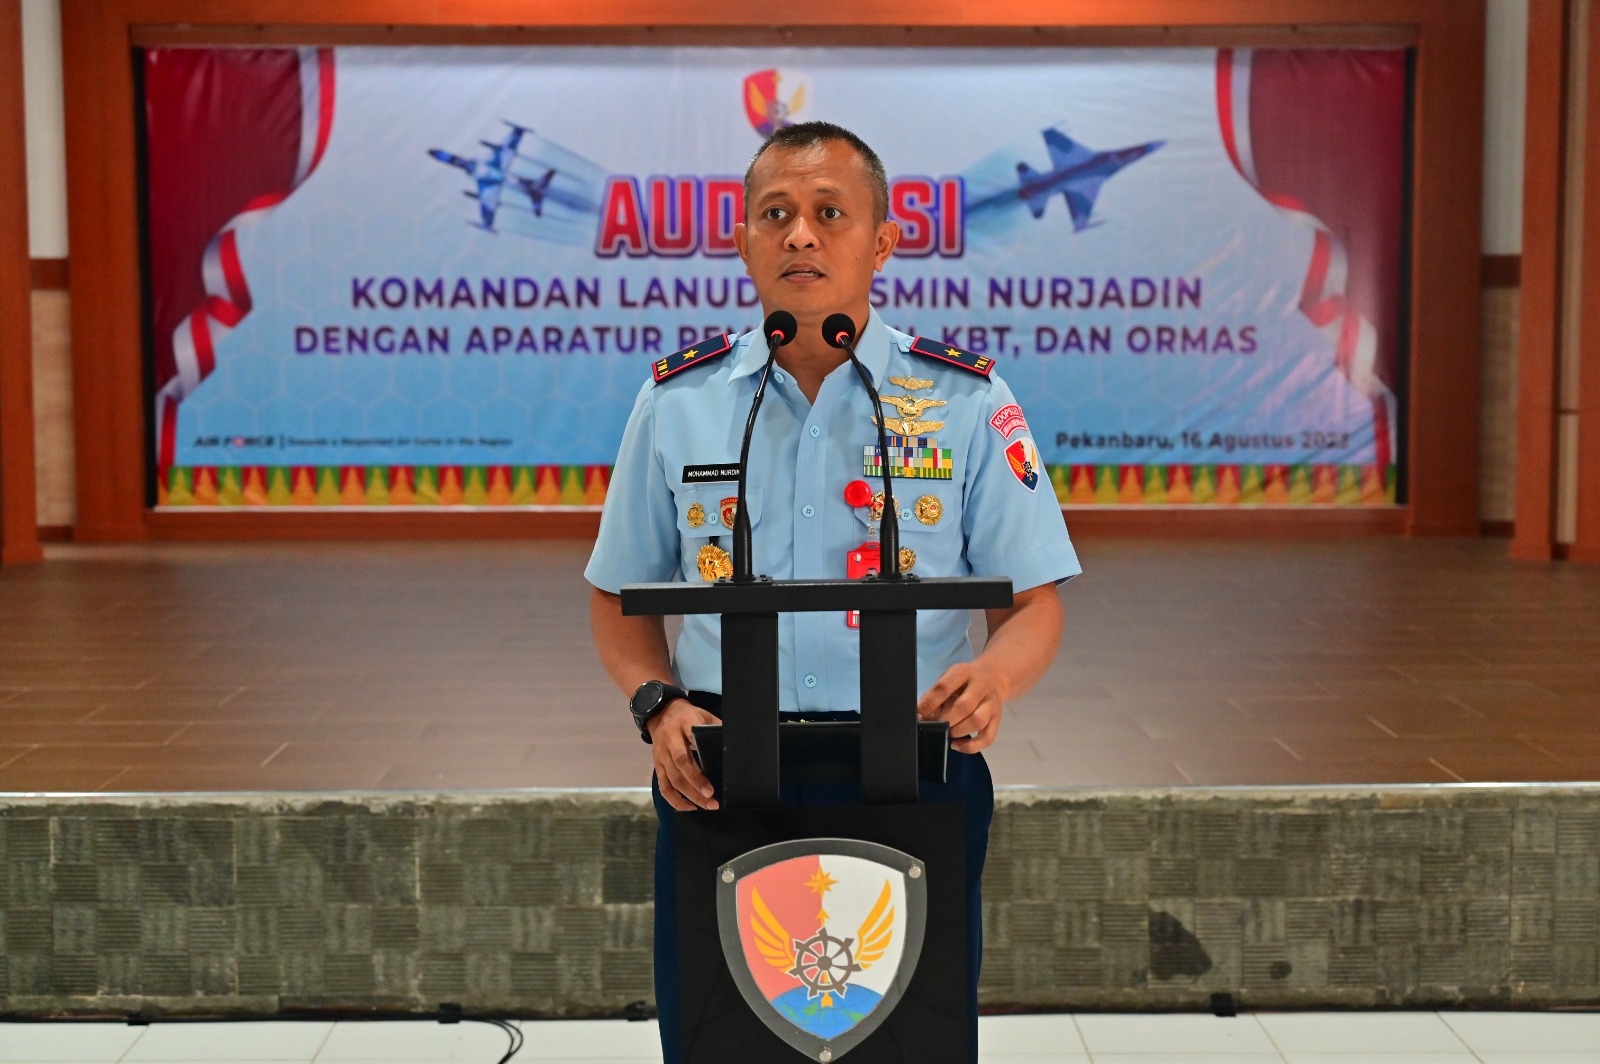 Komandan Lanud Roesmin Nurjadin Marsma TNI Mohammad Nurdin